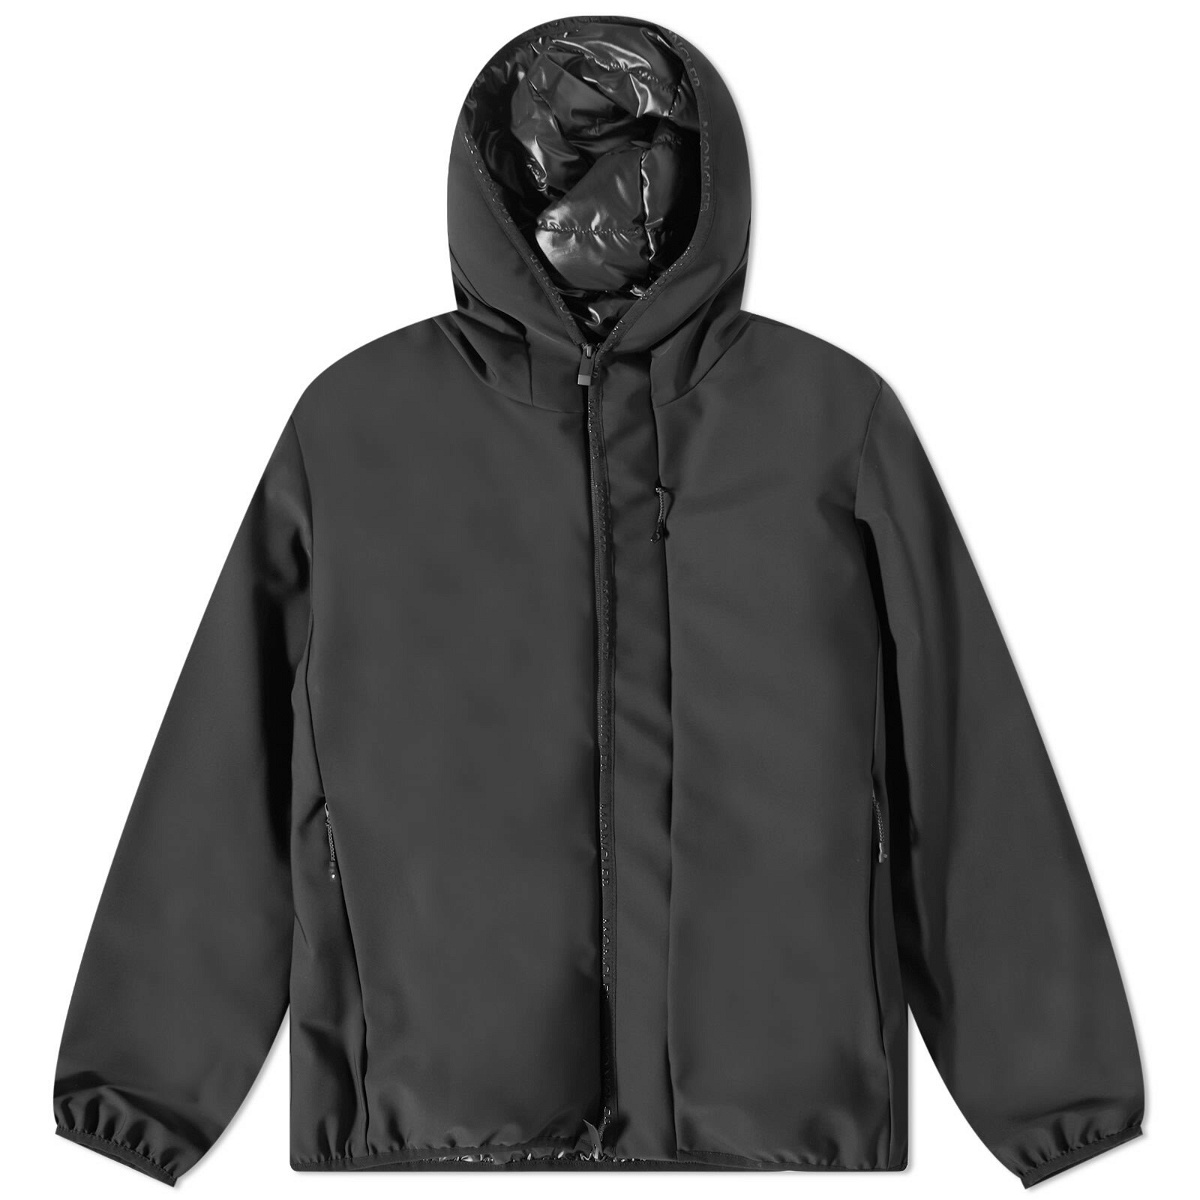 Moncler Men's Iton Hooded Jacket in Black Moncler